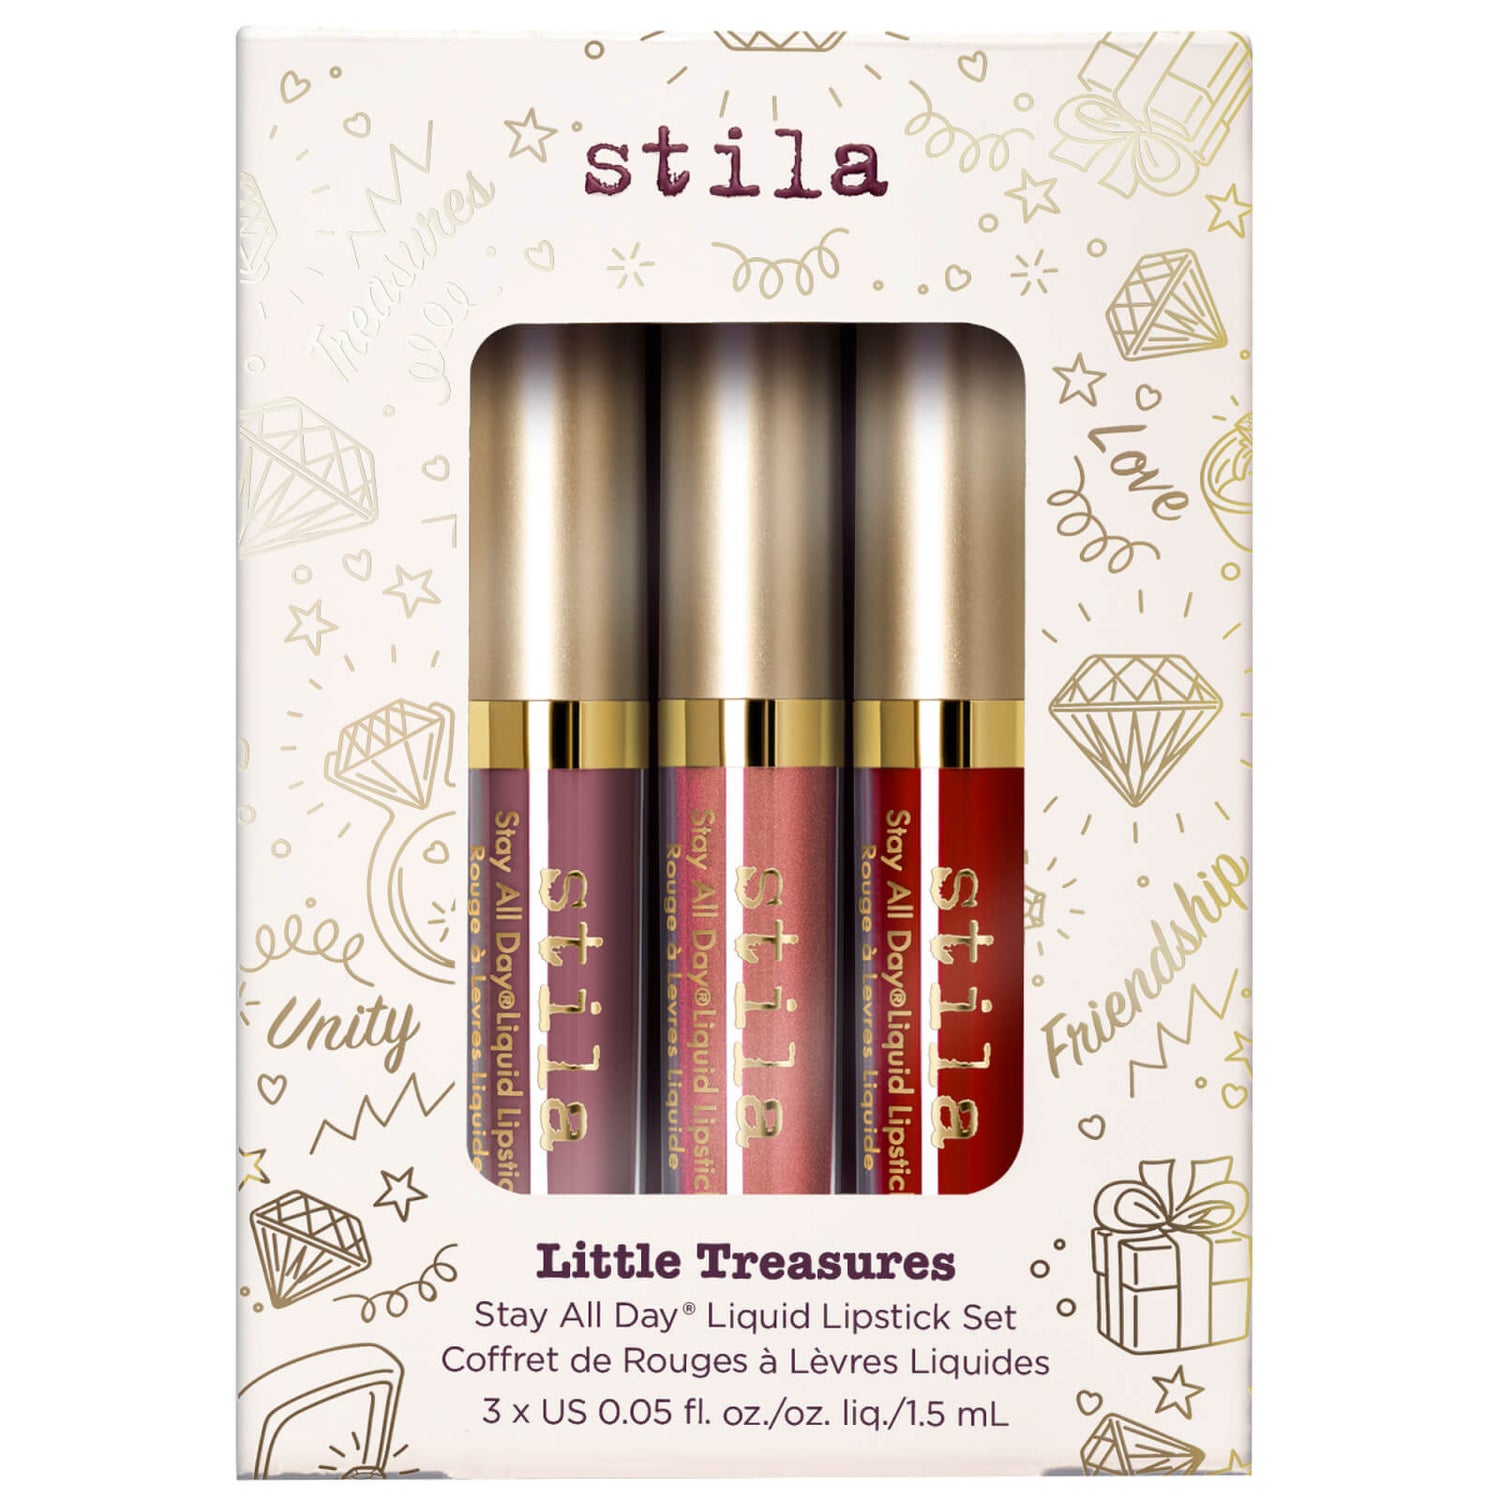 Stila Little Treasures Kit (Worth $36.00)